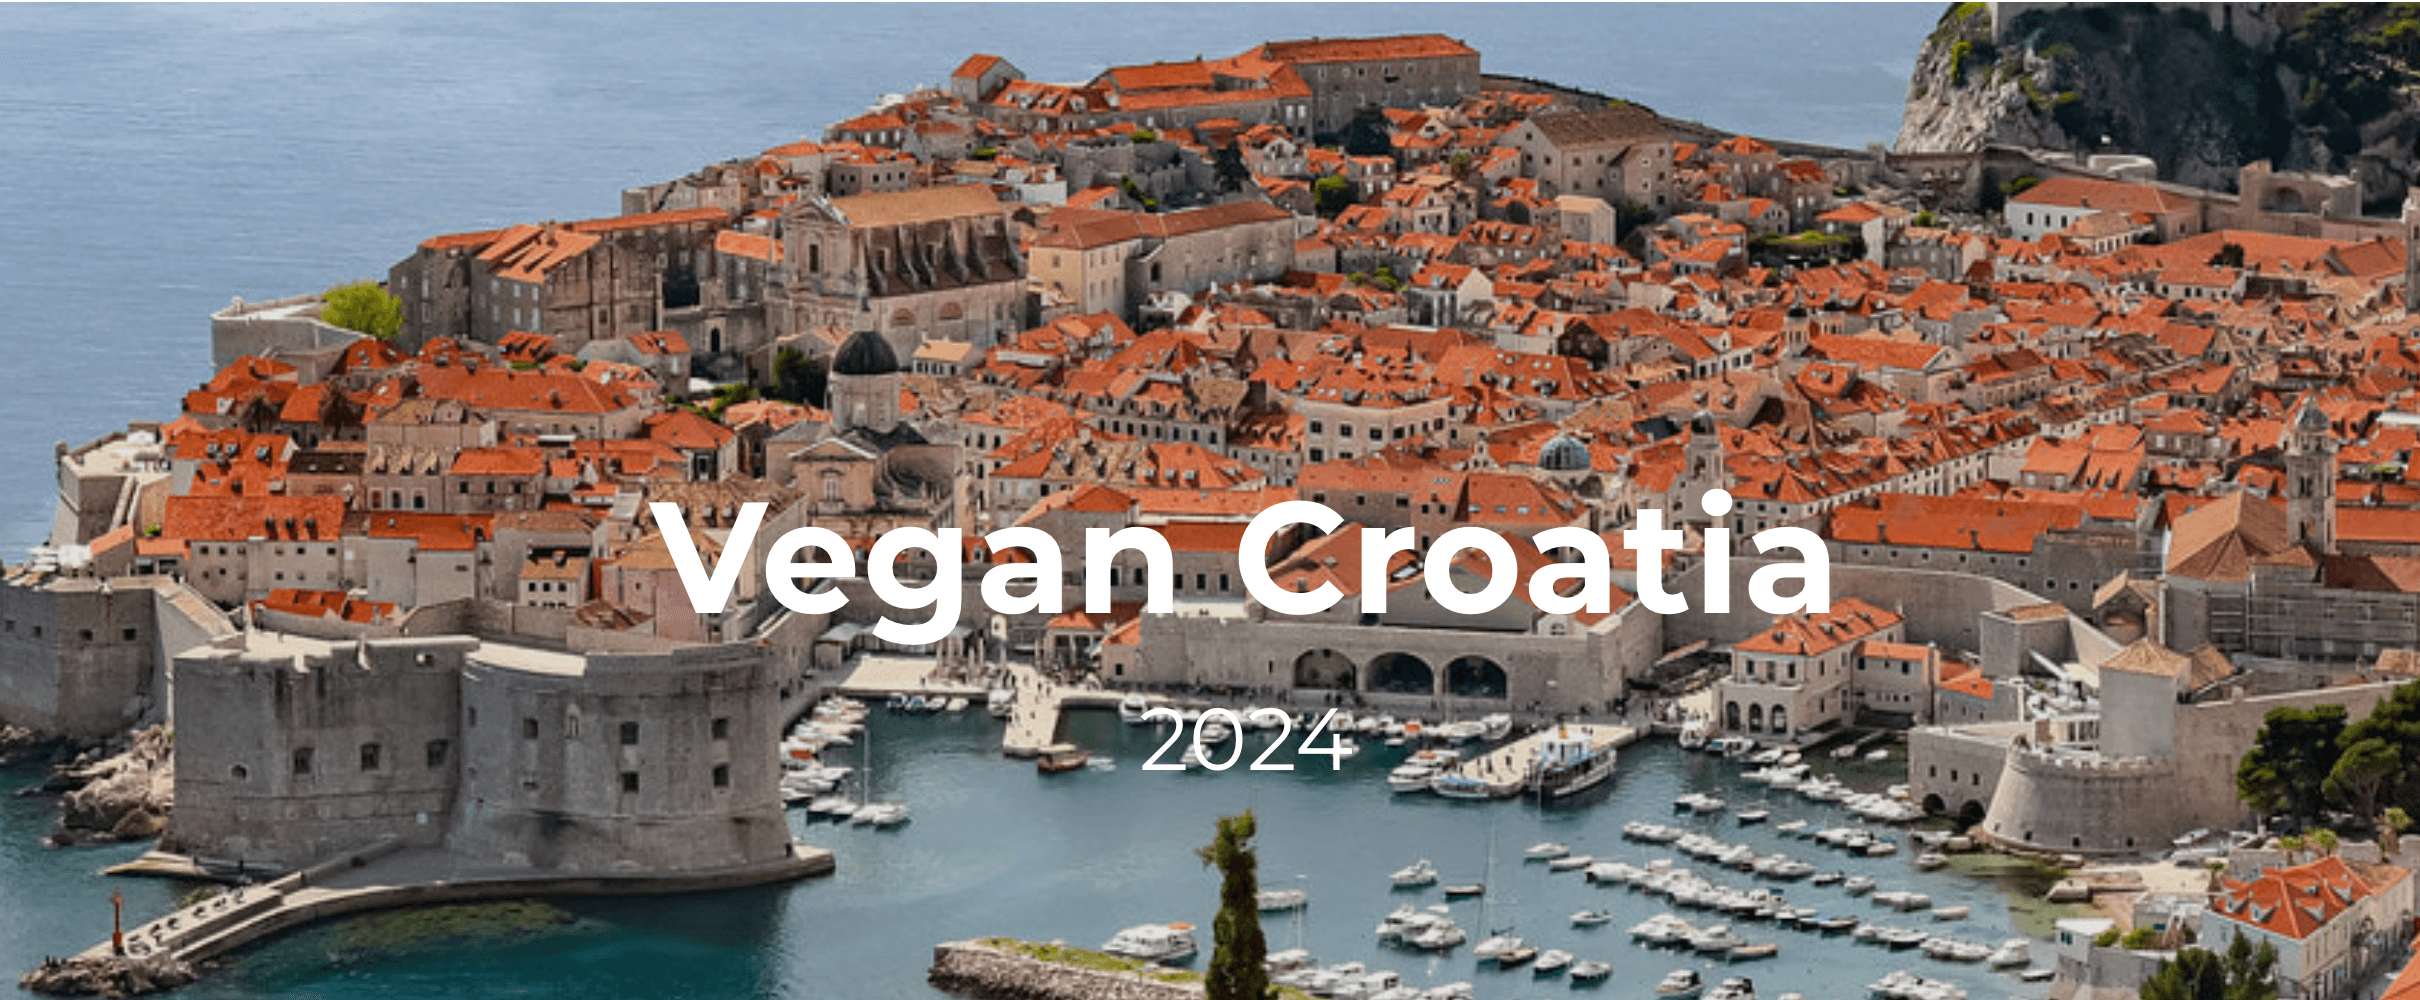 Vegan Adult-Only Cruise in Croatia in 2024